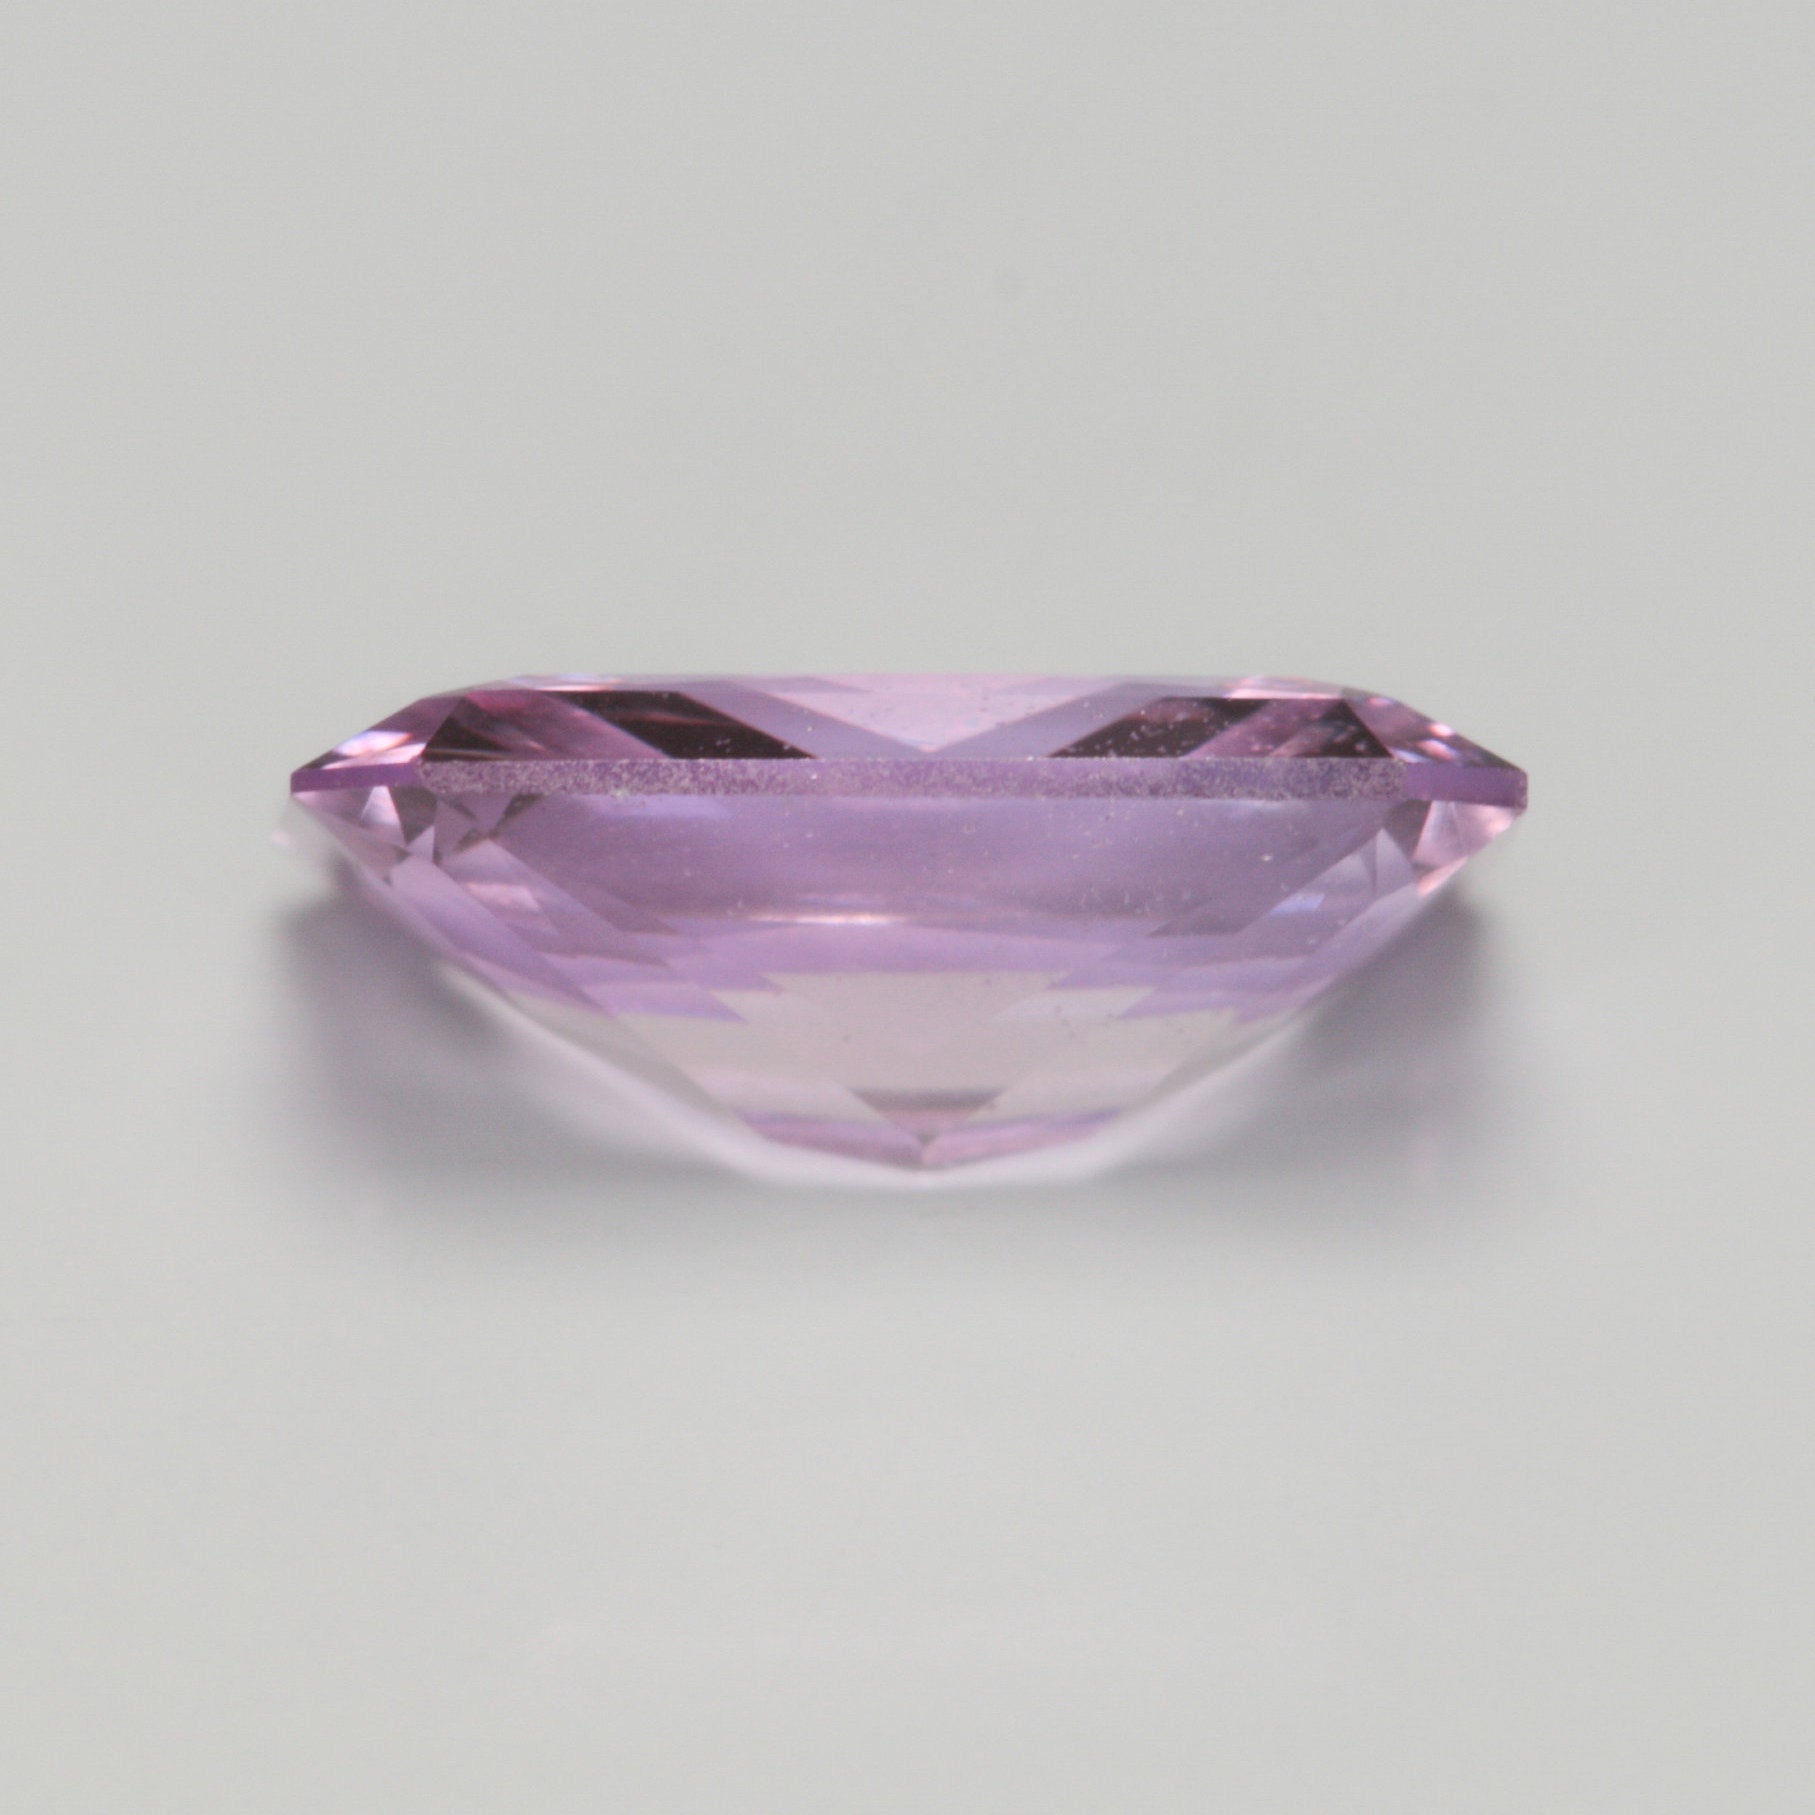 0.92 carat purple pink radiant emerald cut sapphire - custom work - inventory code PPSAP92 - Midwinter Co. Alternative Bridal Rings and Modern Fine Jewelry